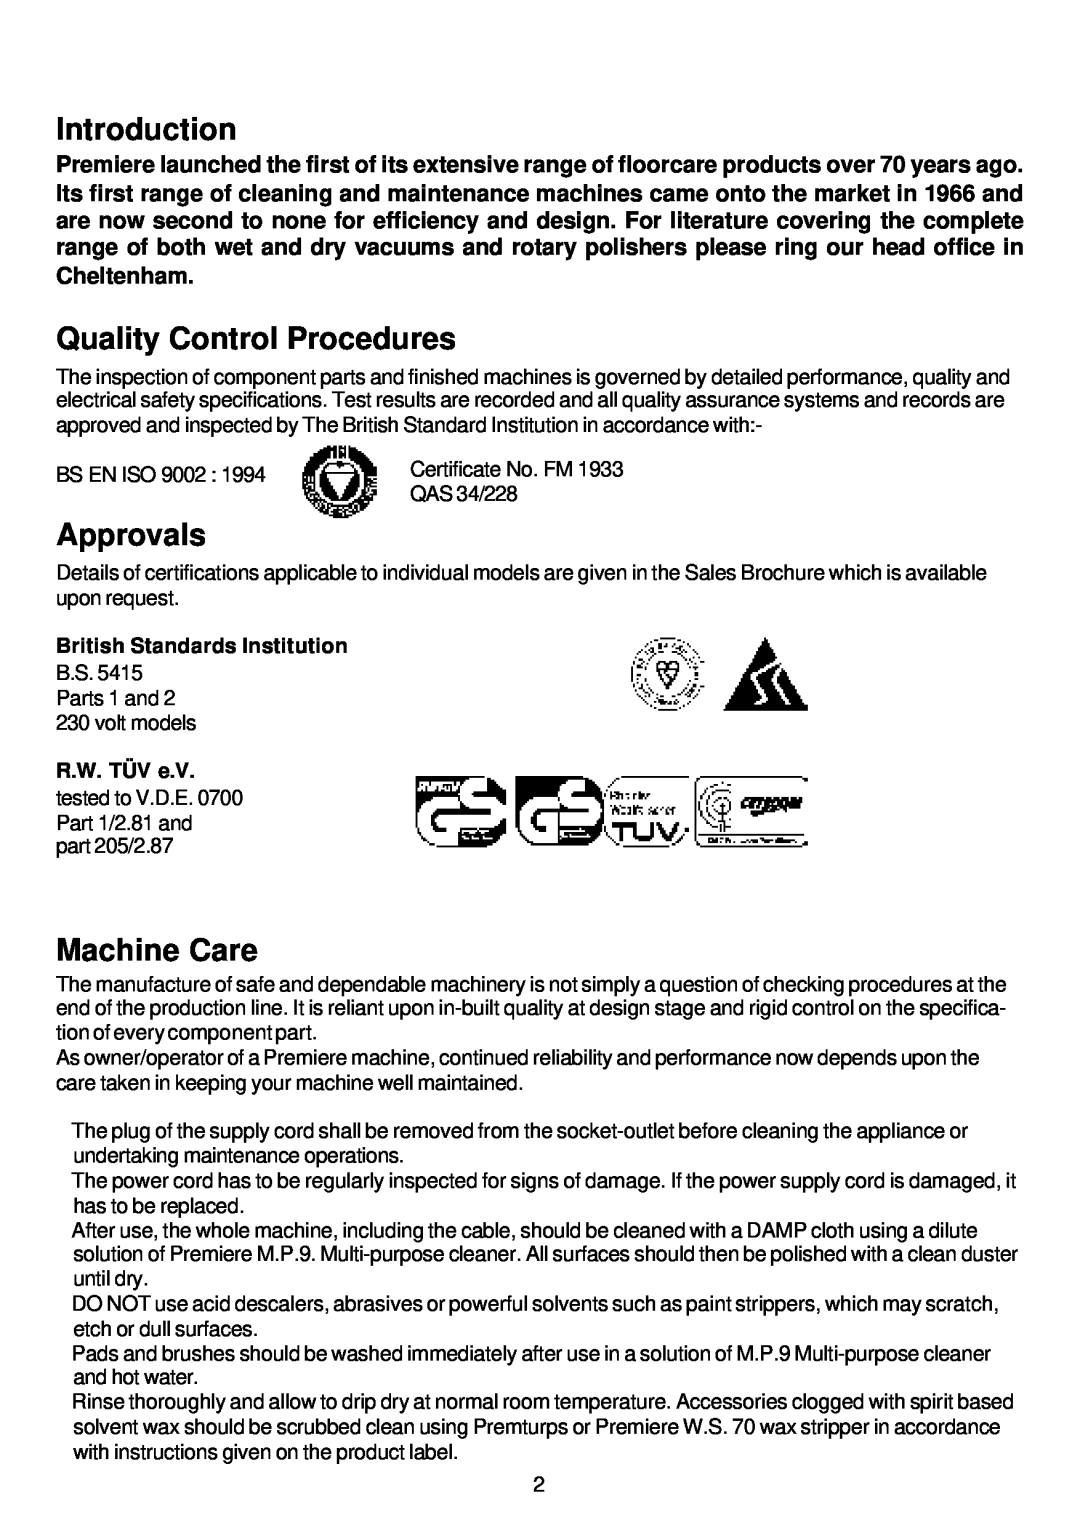 Premier HV 15, HV 17 Introduction, Quality Control Procedures, Approvals, Machine Care, British Standards Institution 